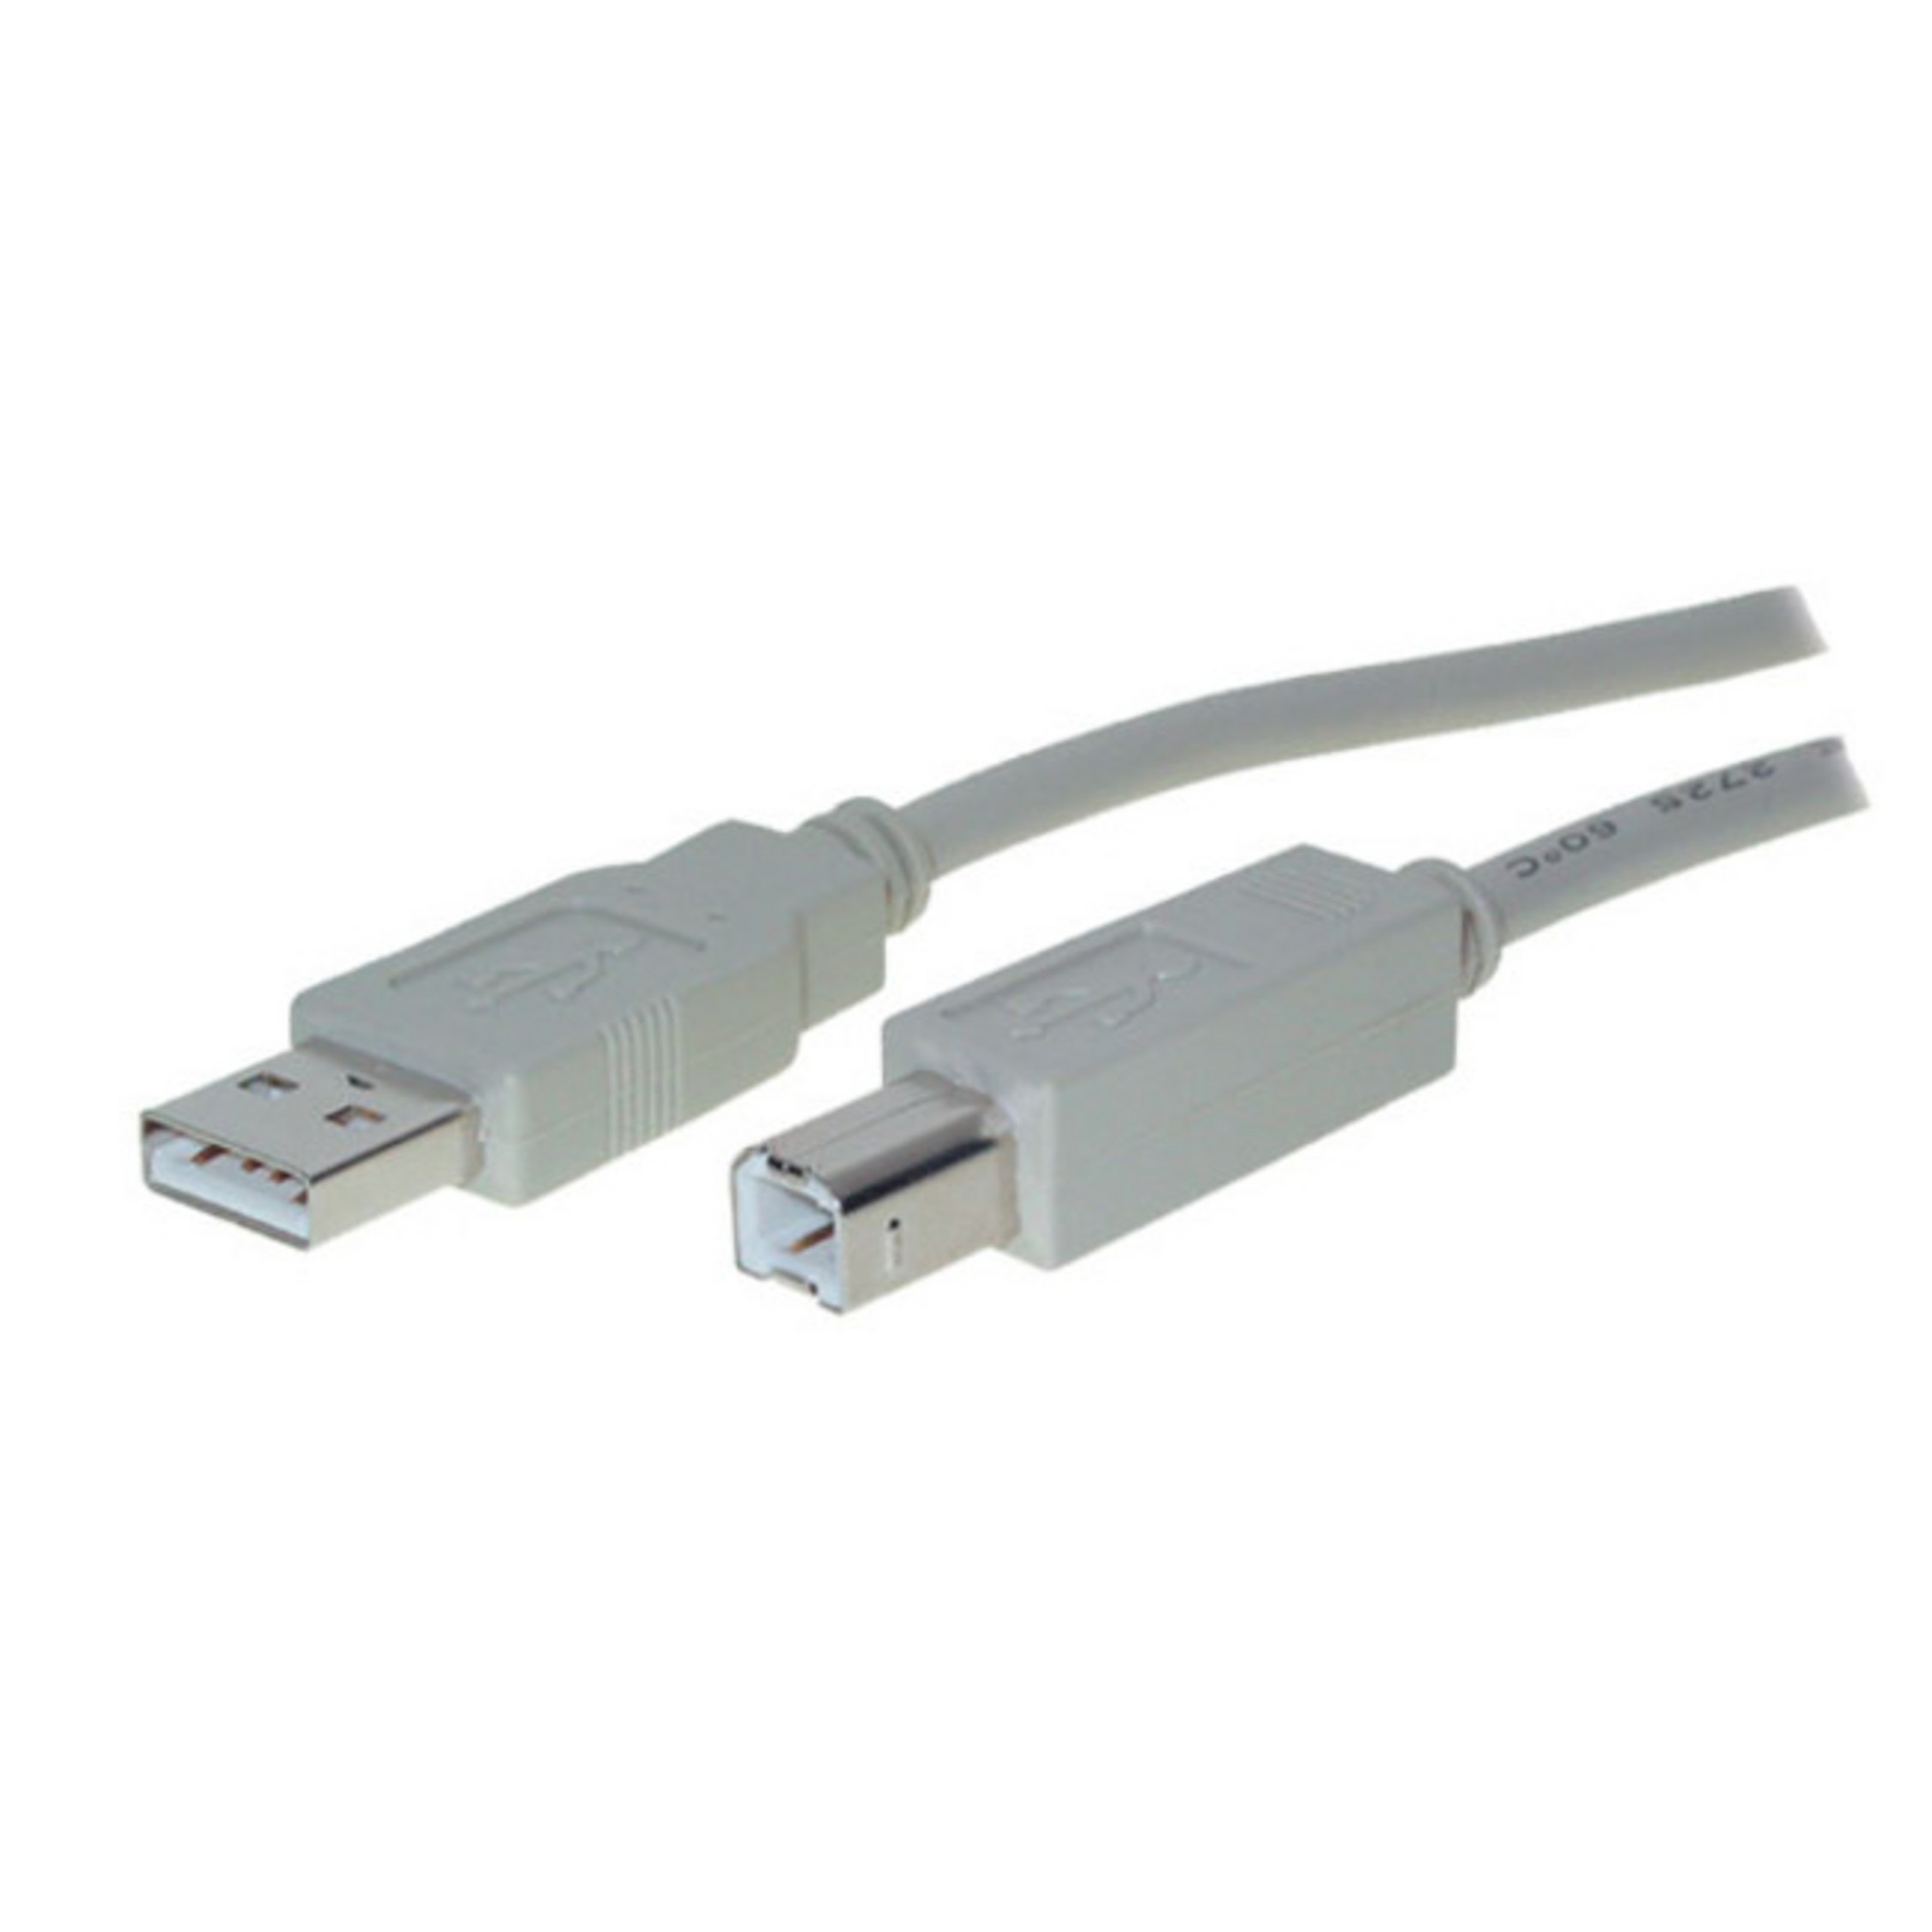 USB CONNECTIVITY Stecker A USB Stecker / Kabel 1,8m S/CONN Kabel USB B MAXIMUM 2.0